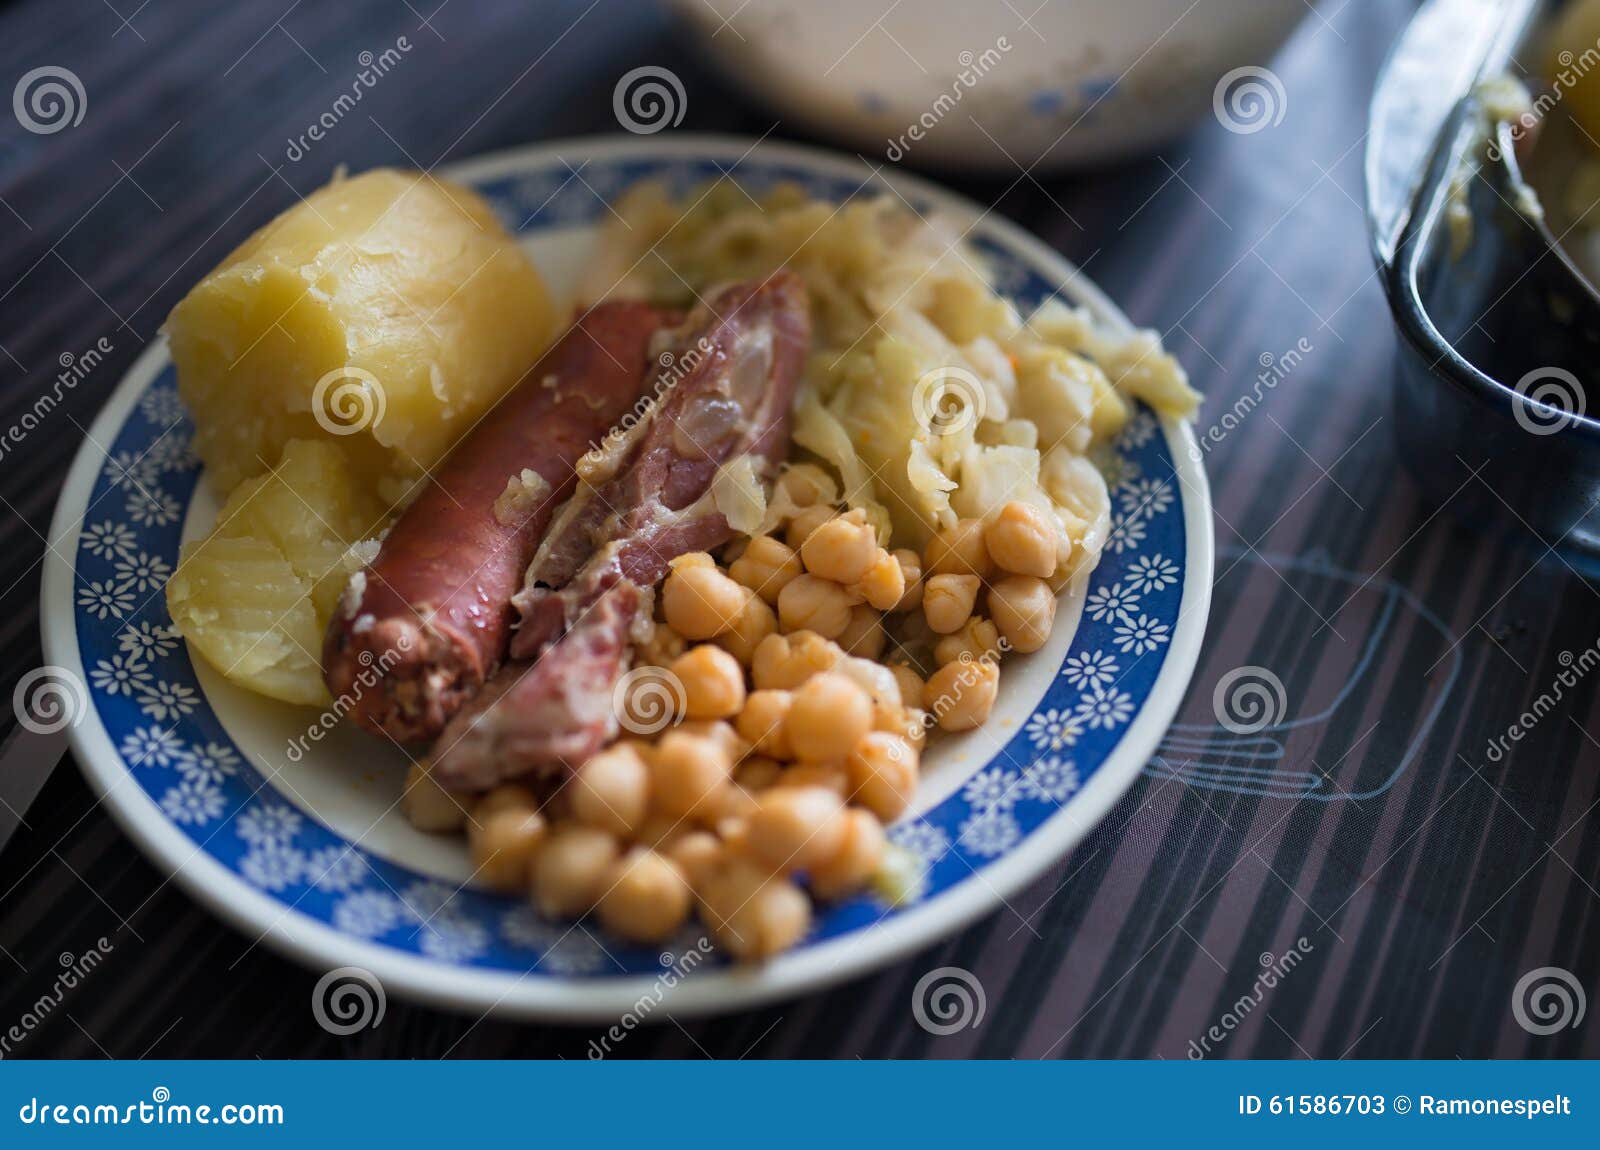 galician stew